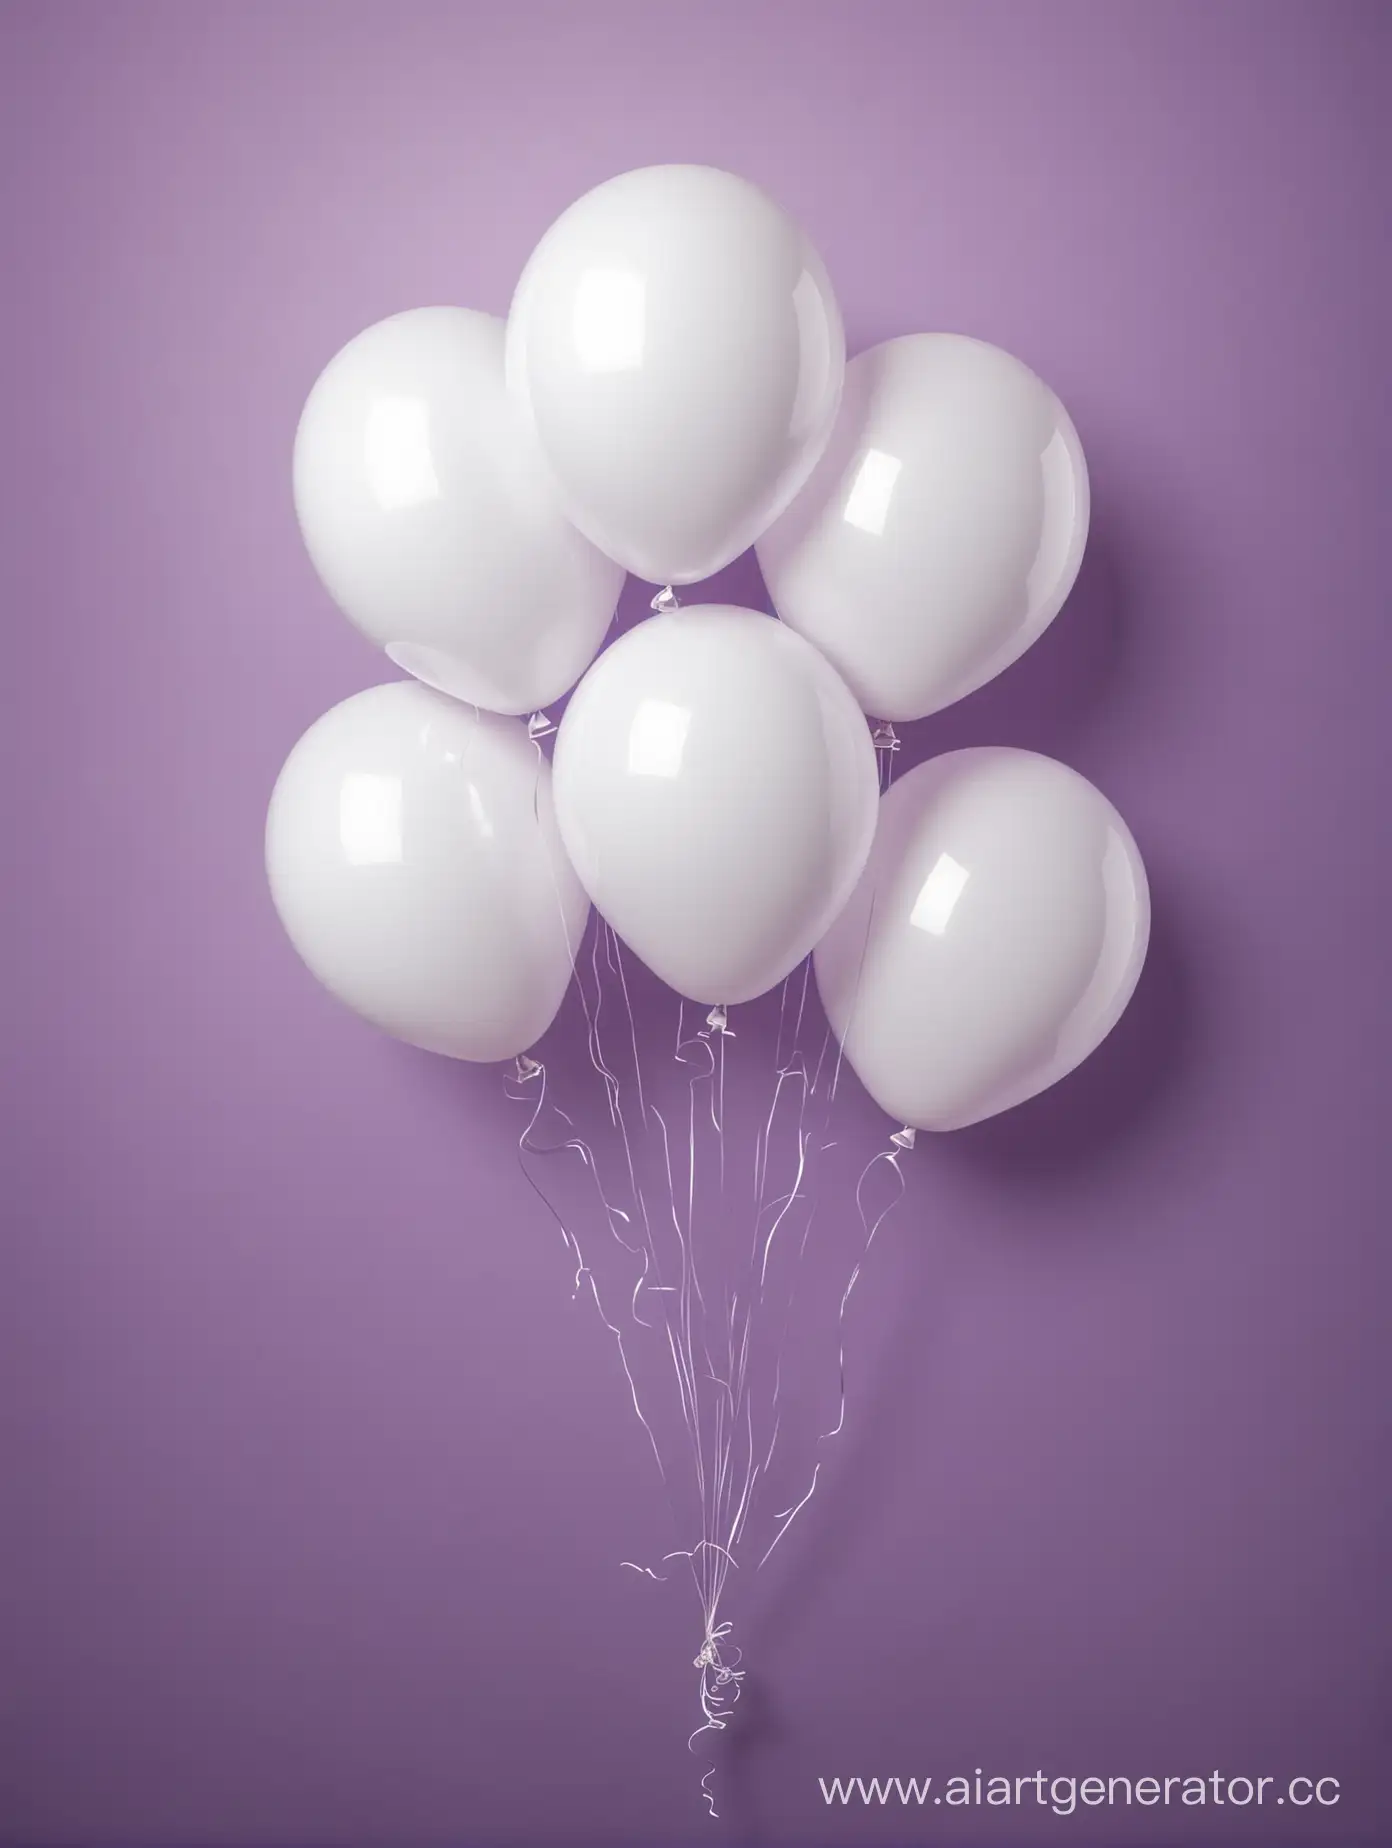 White-Helium-Balloons-on-Purple-Background-Vector-Image